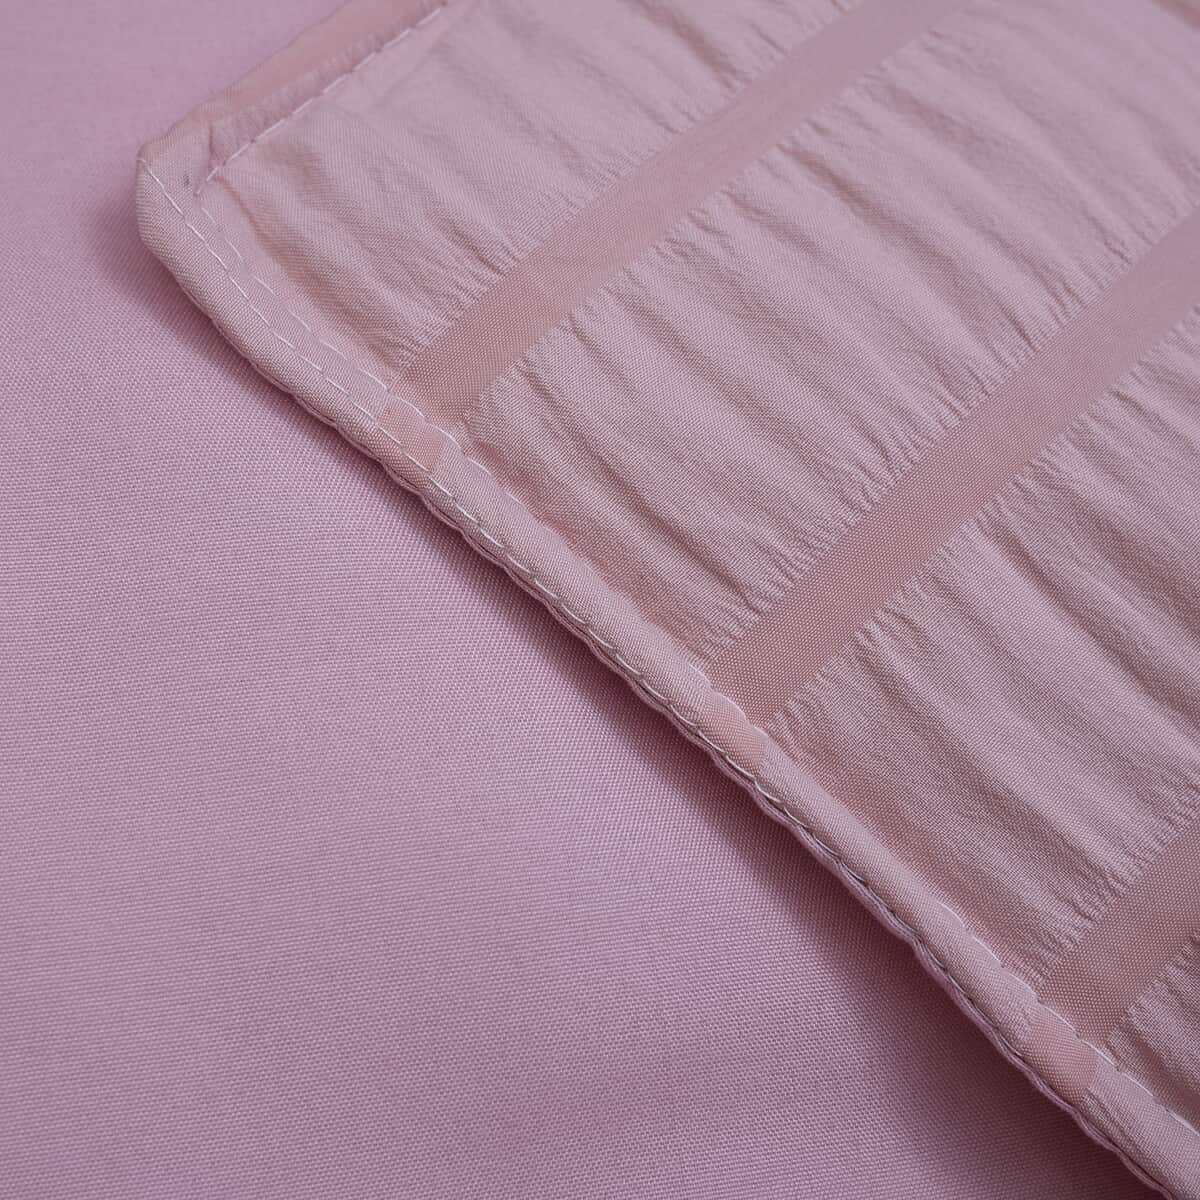 Homesmart Pink Striped King Size Microfiber Quilt With Set of Shams image number 4